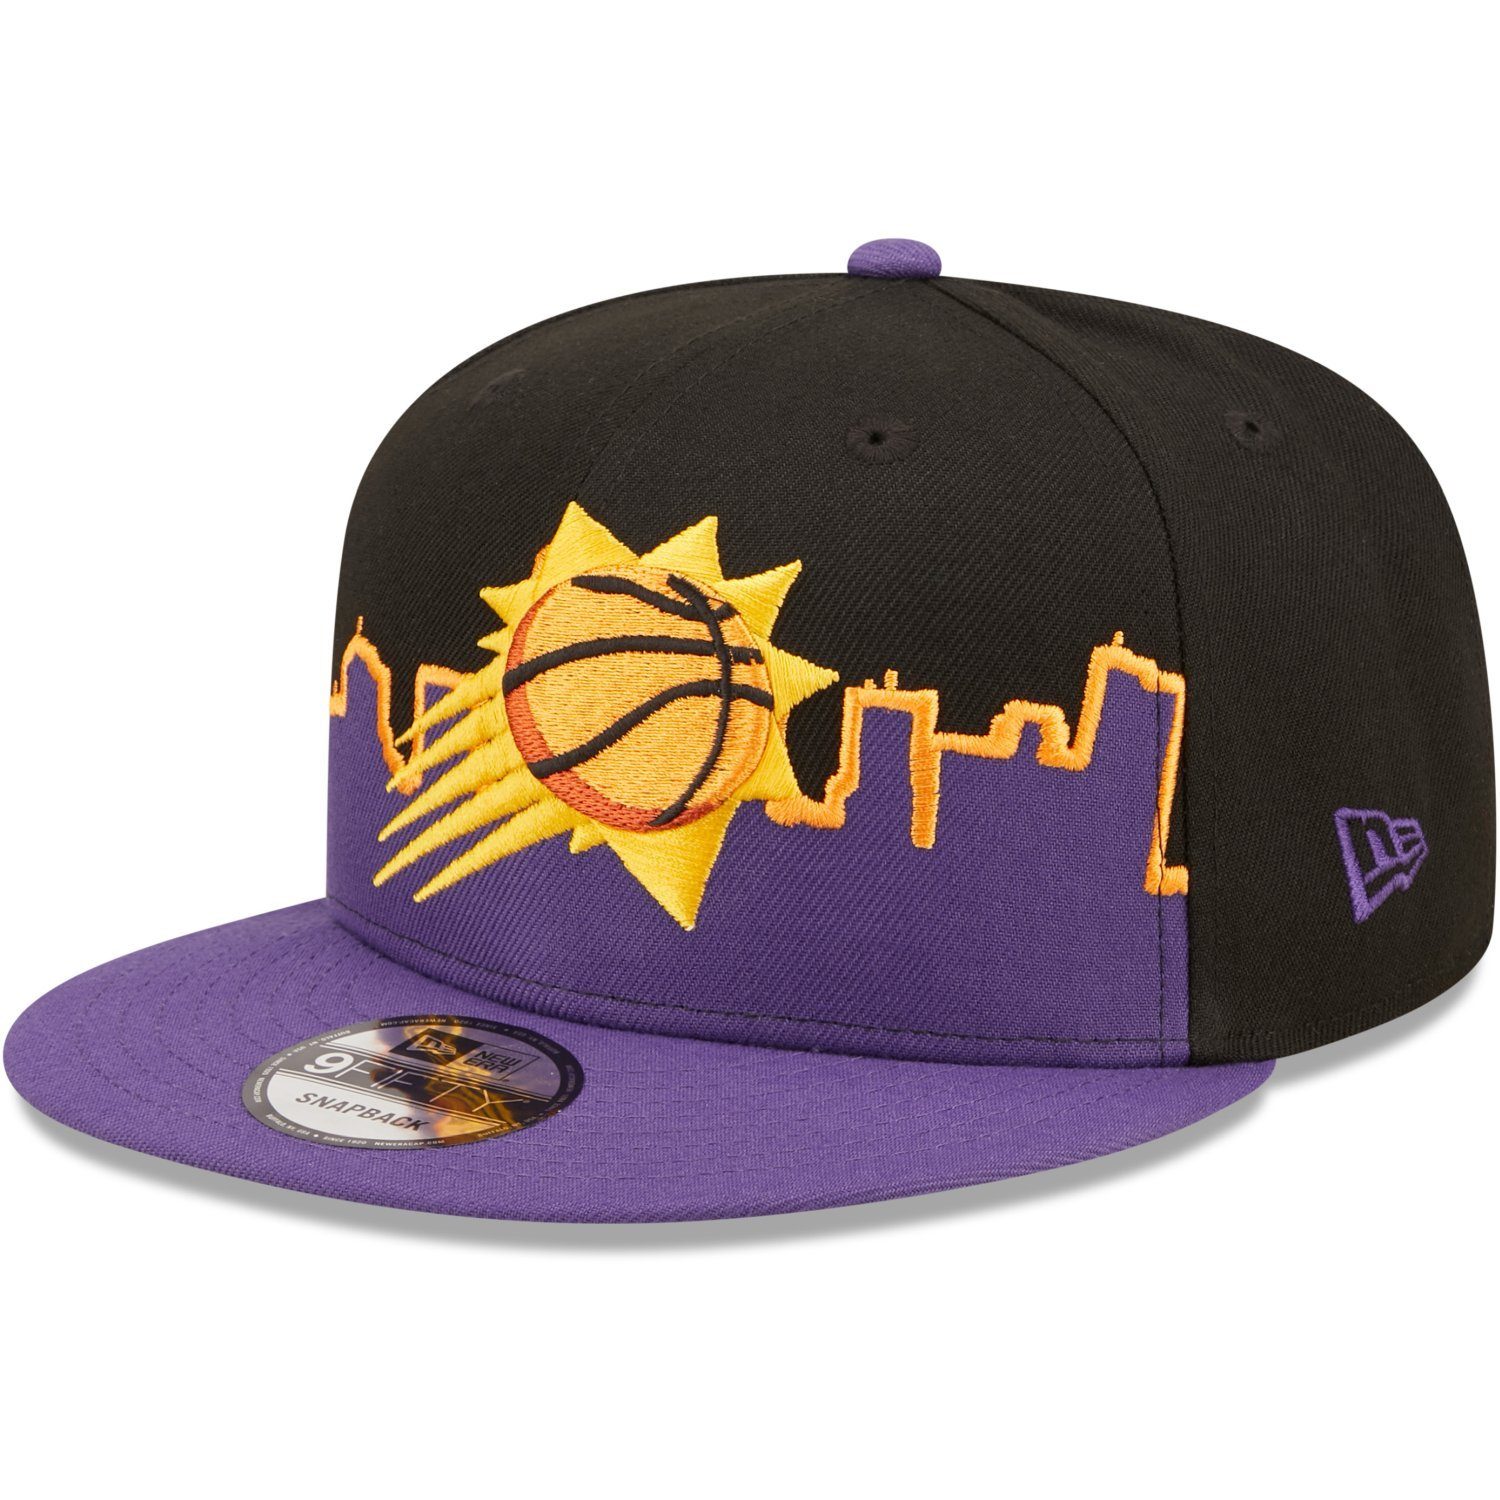 New Era Snapback Suns TIPOFF NBA Phoenix 9FIFTY Cap